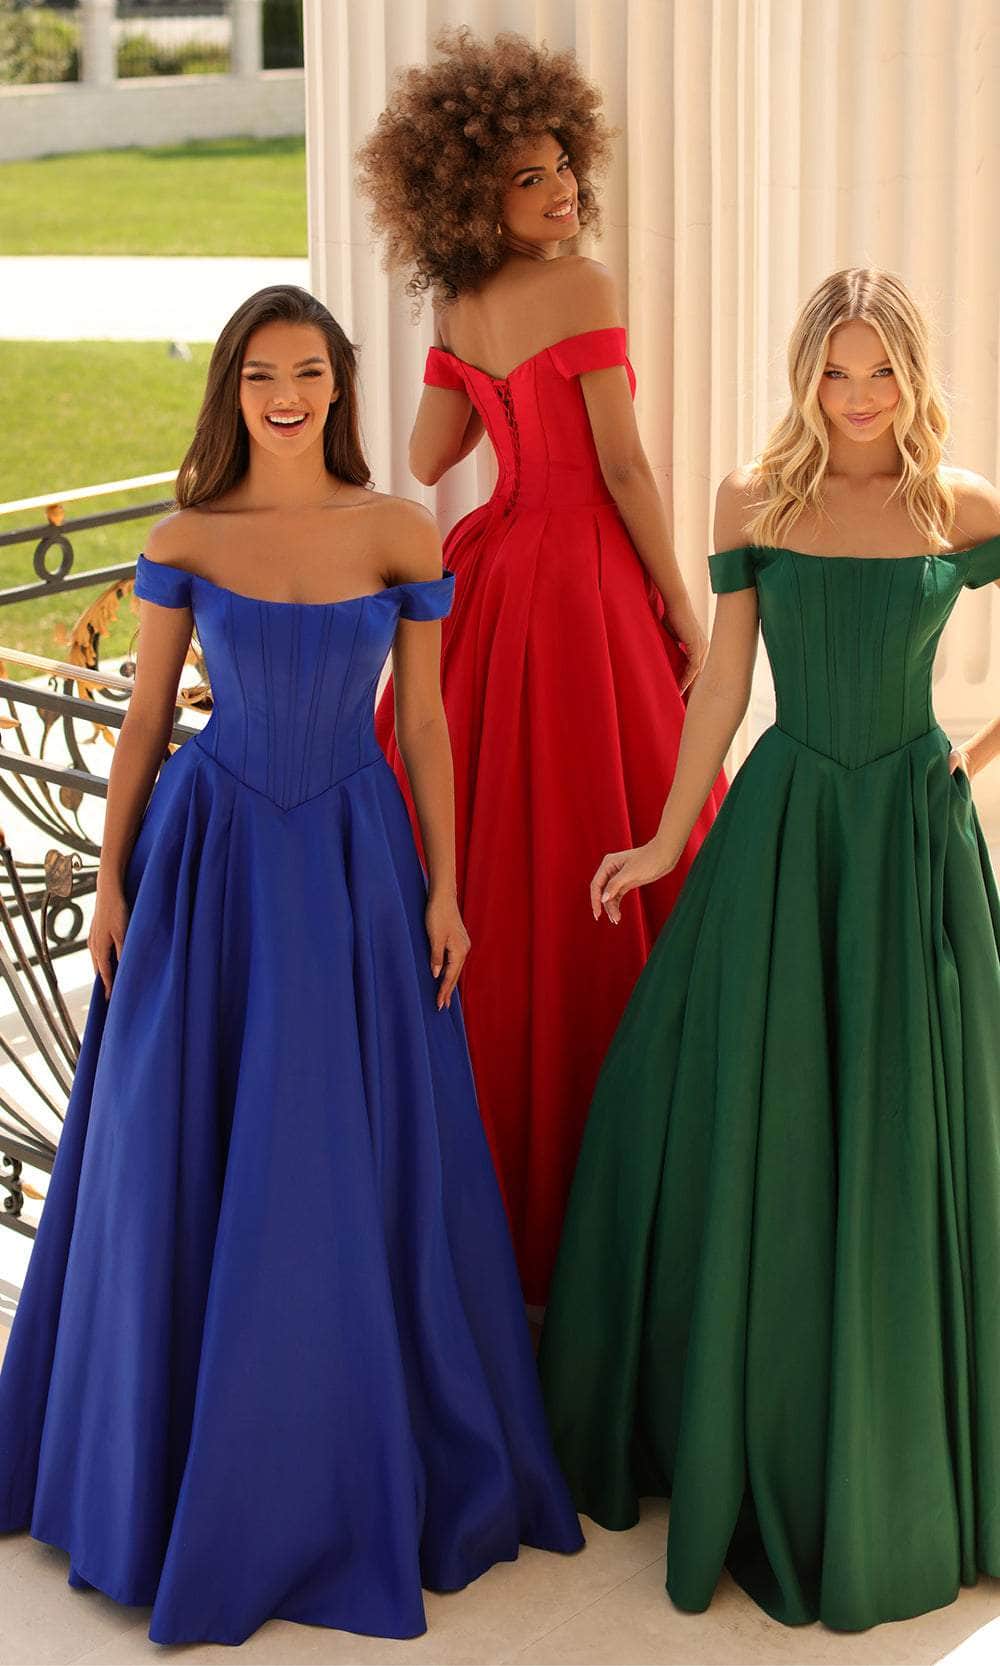 Clarisse 810604 - Off Shoulder Corset Prom Dress Special Occasion Dress